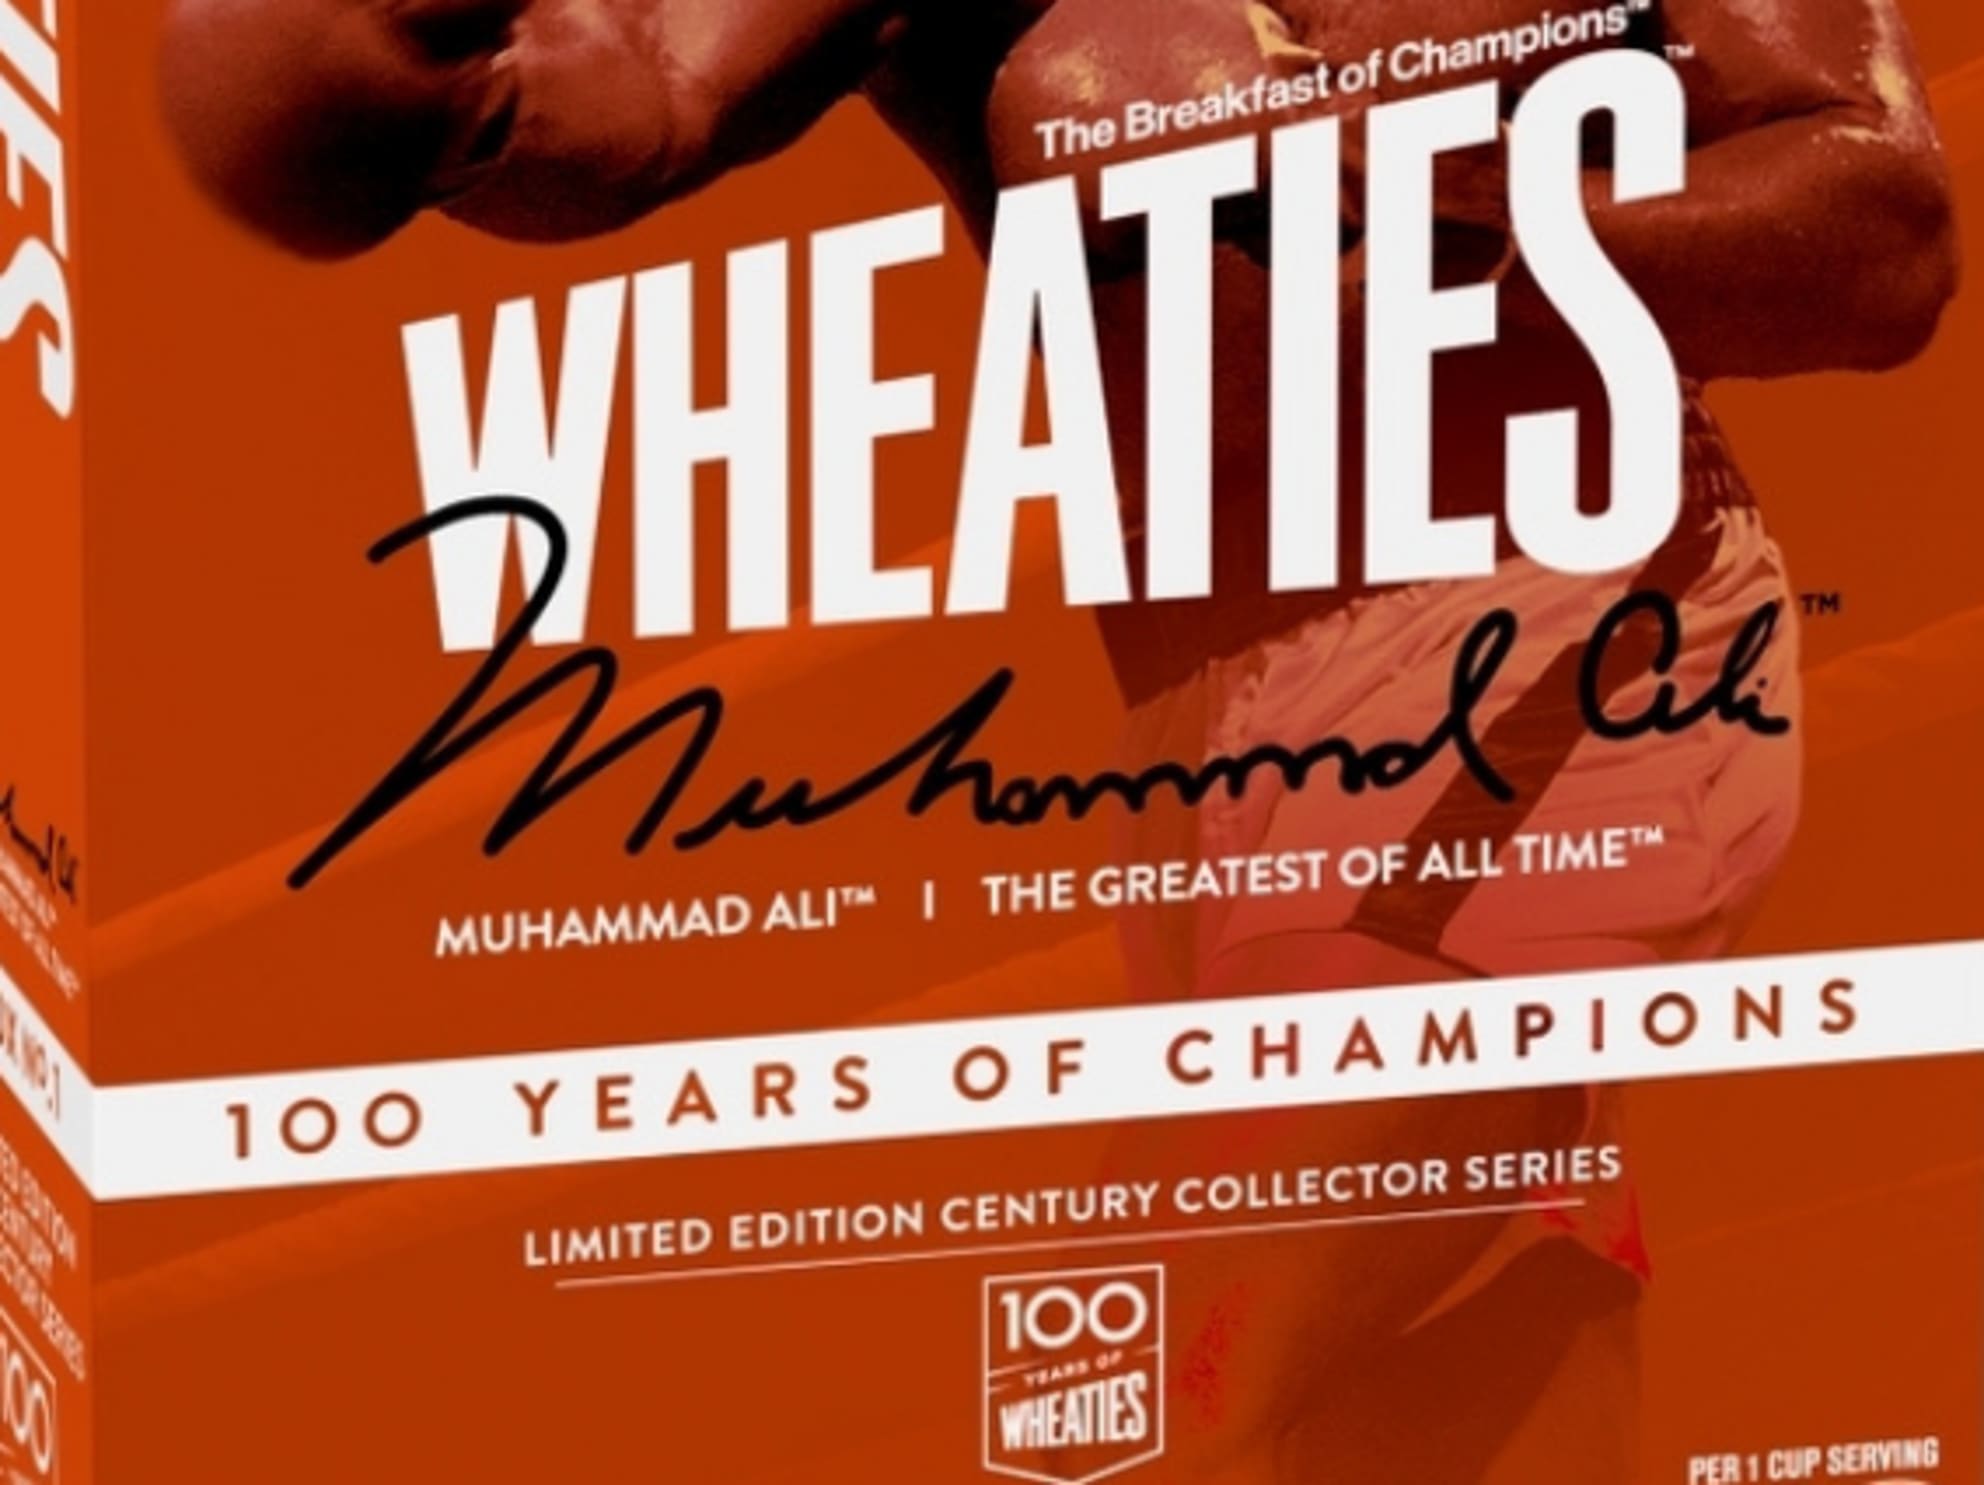 Close up of Muhammad Ali Wheaties box